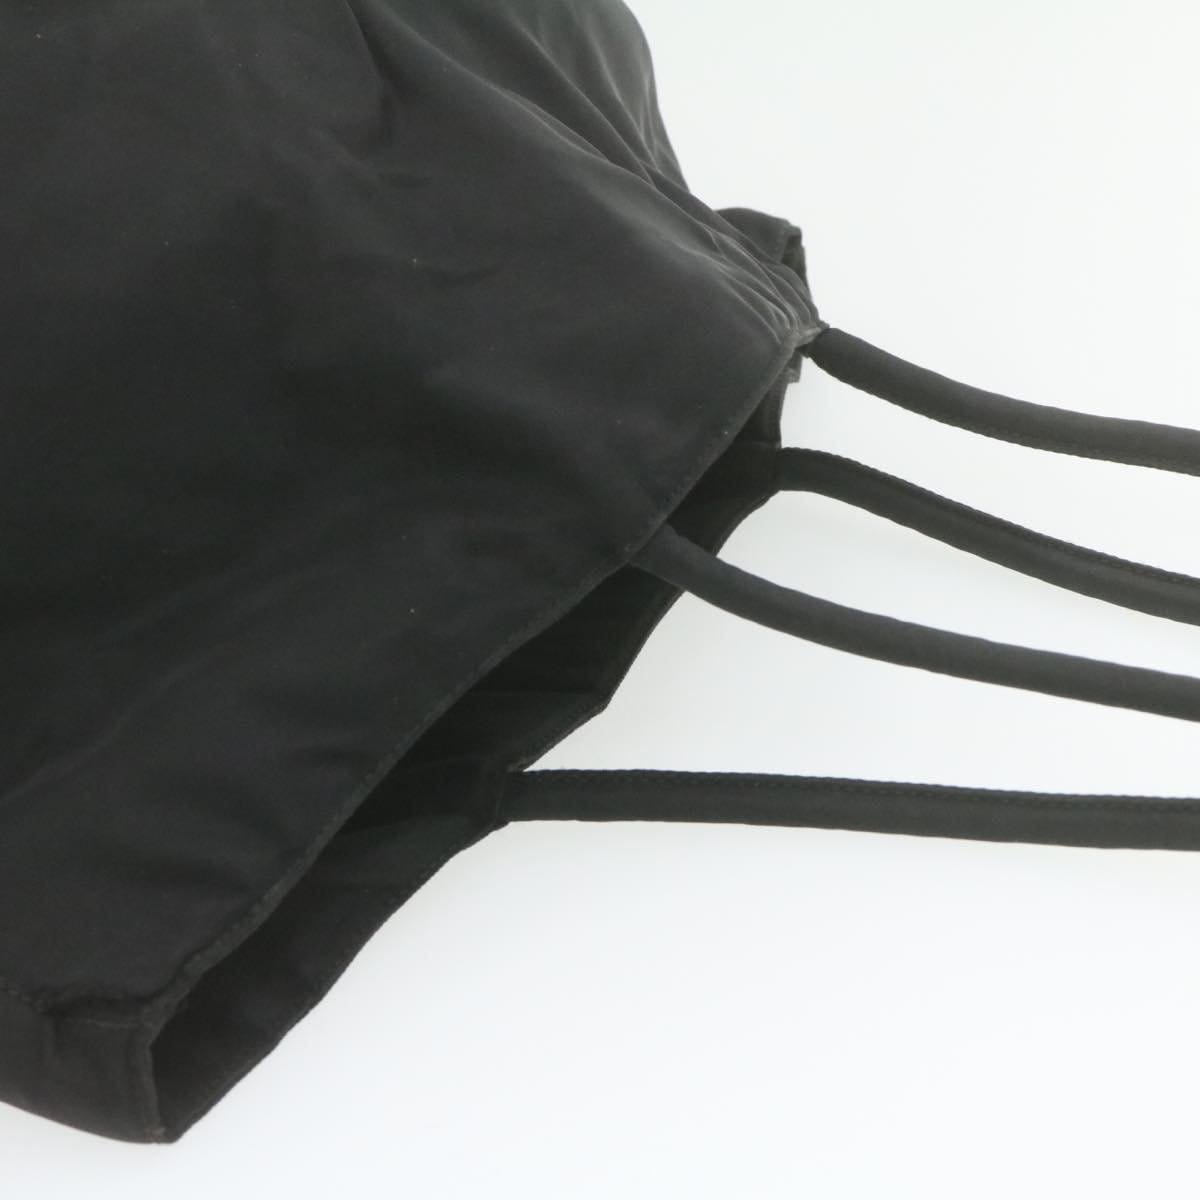 Prada PRADA Nylon Tote Bag Black MW2265